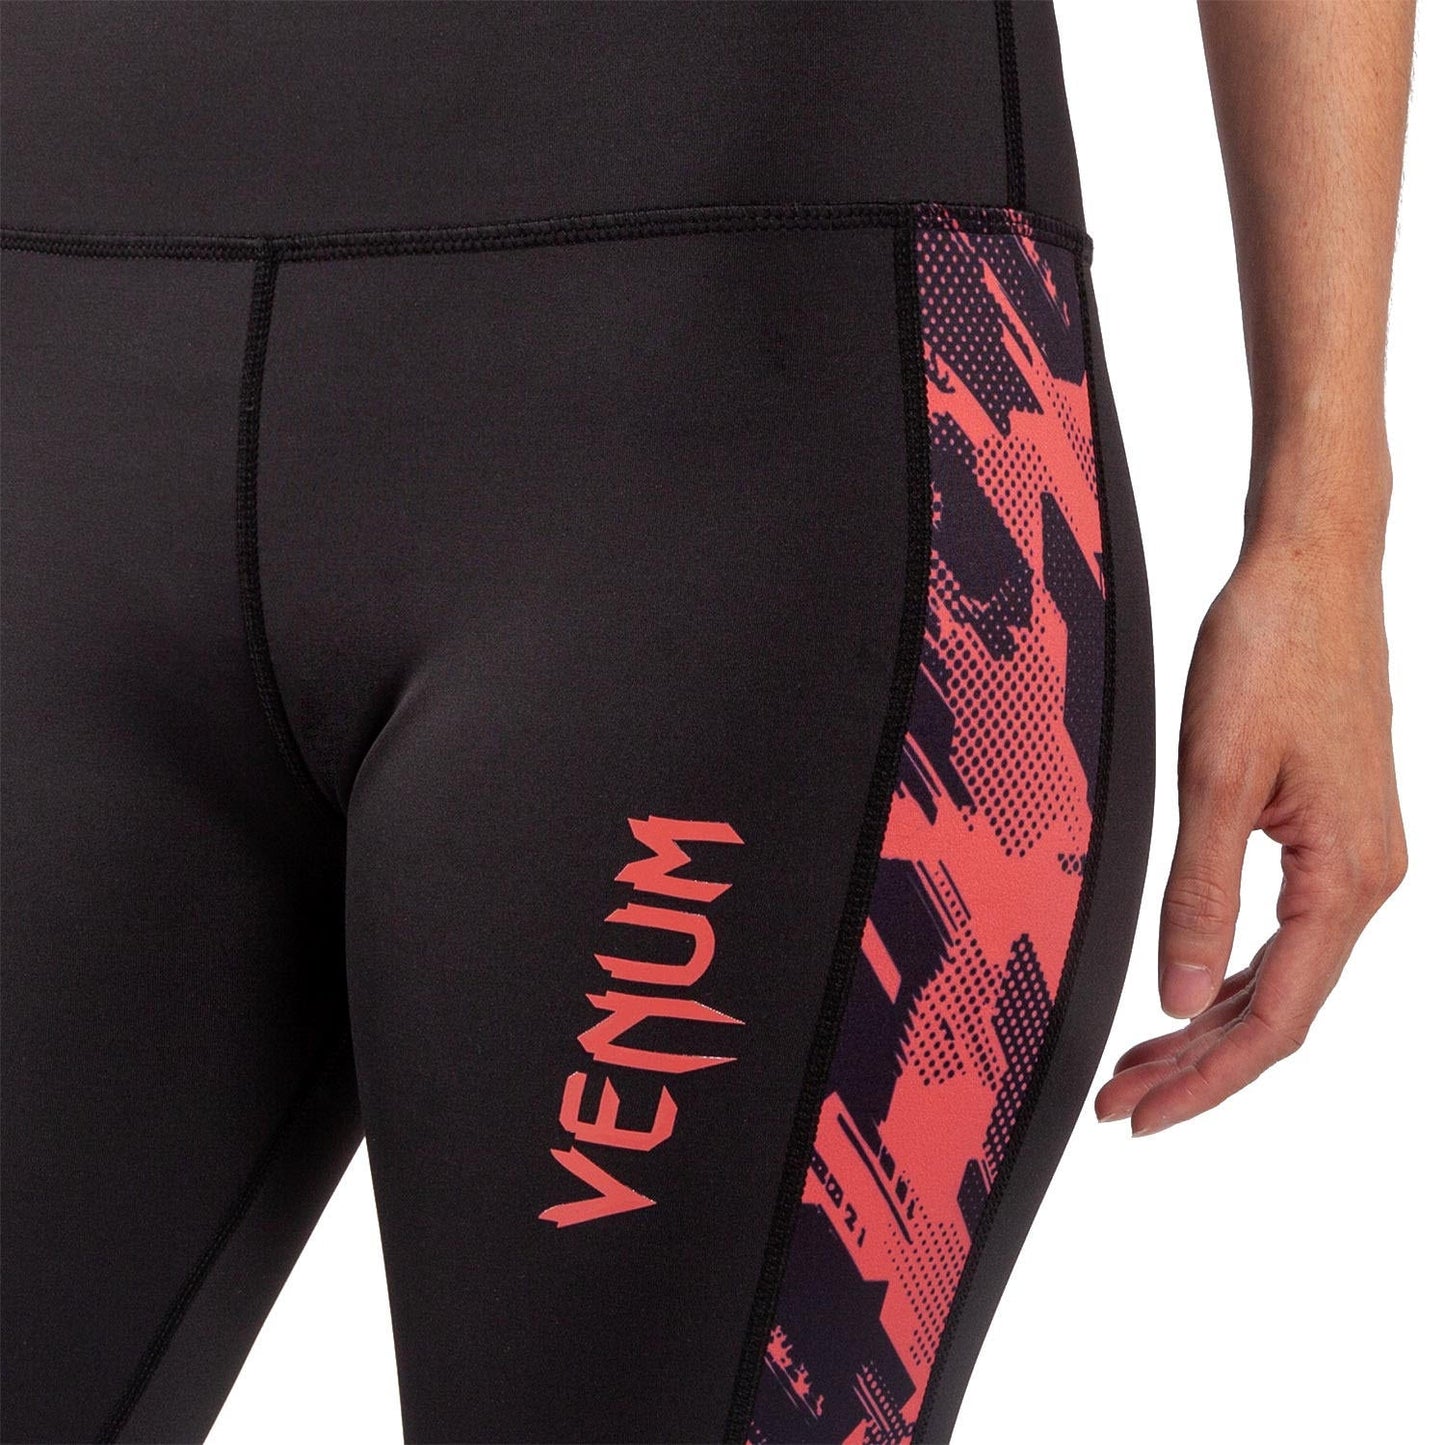 Venum Tecmo Leggings - For Women - Black/Coral